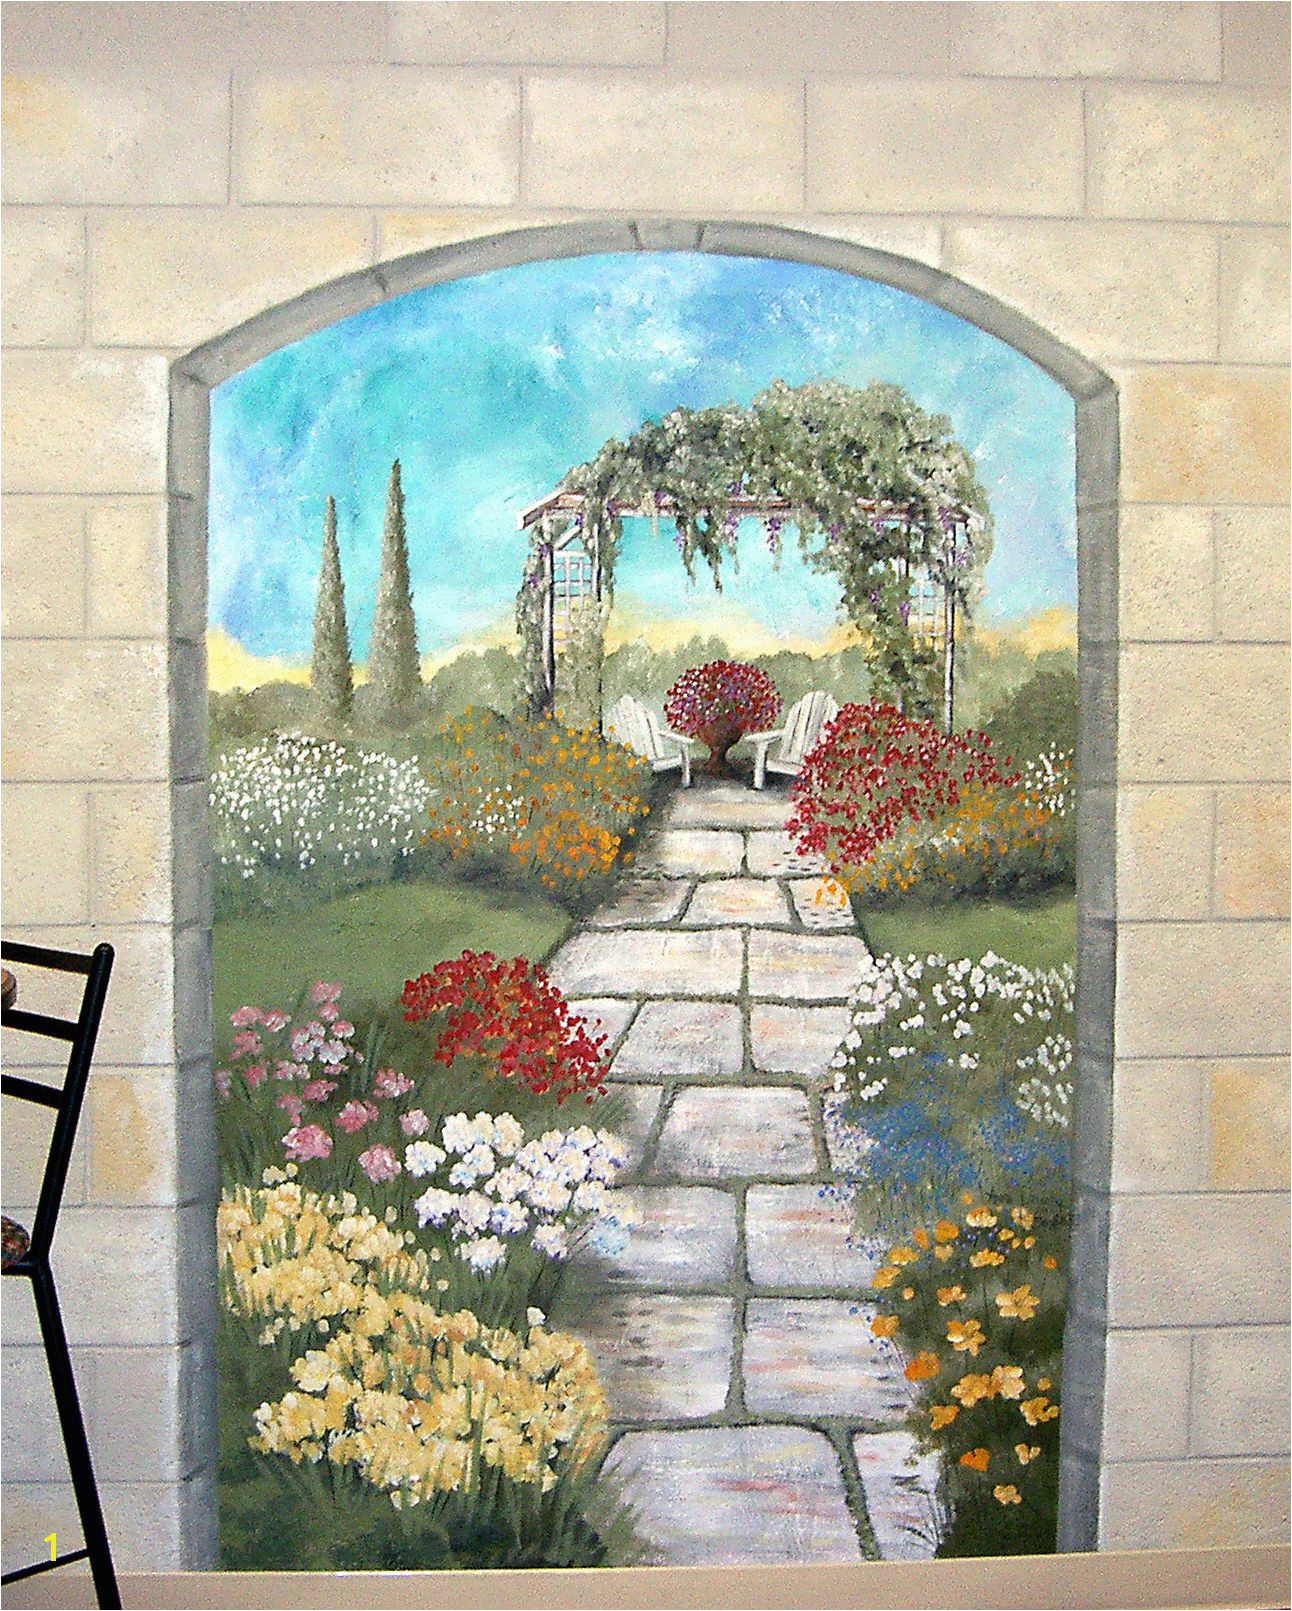 Picture Murals On Walls Garden Mural On A Cement Block Wall Colorful Flower Garden Mural